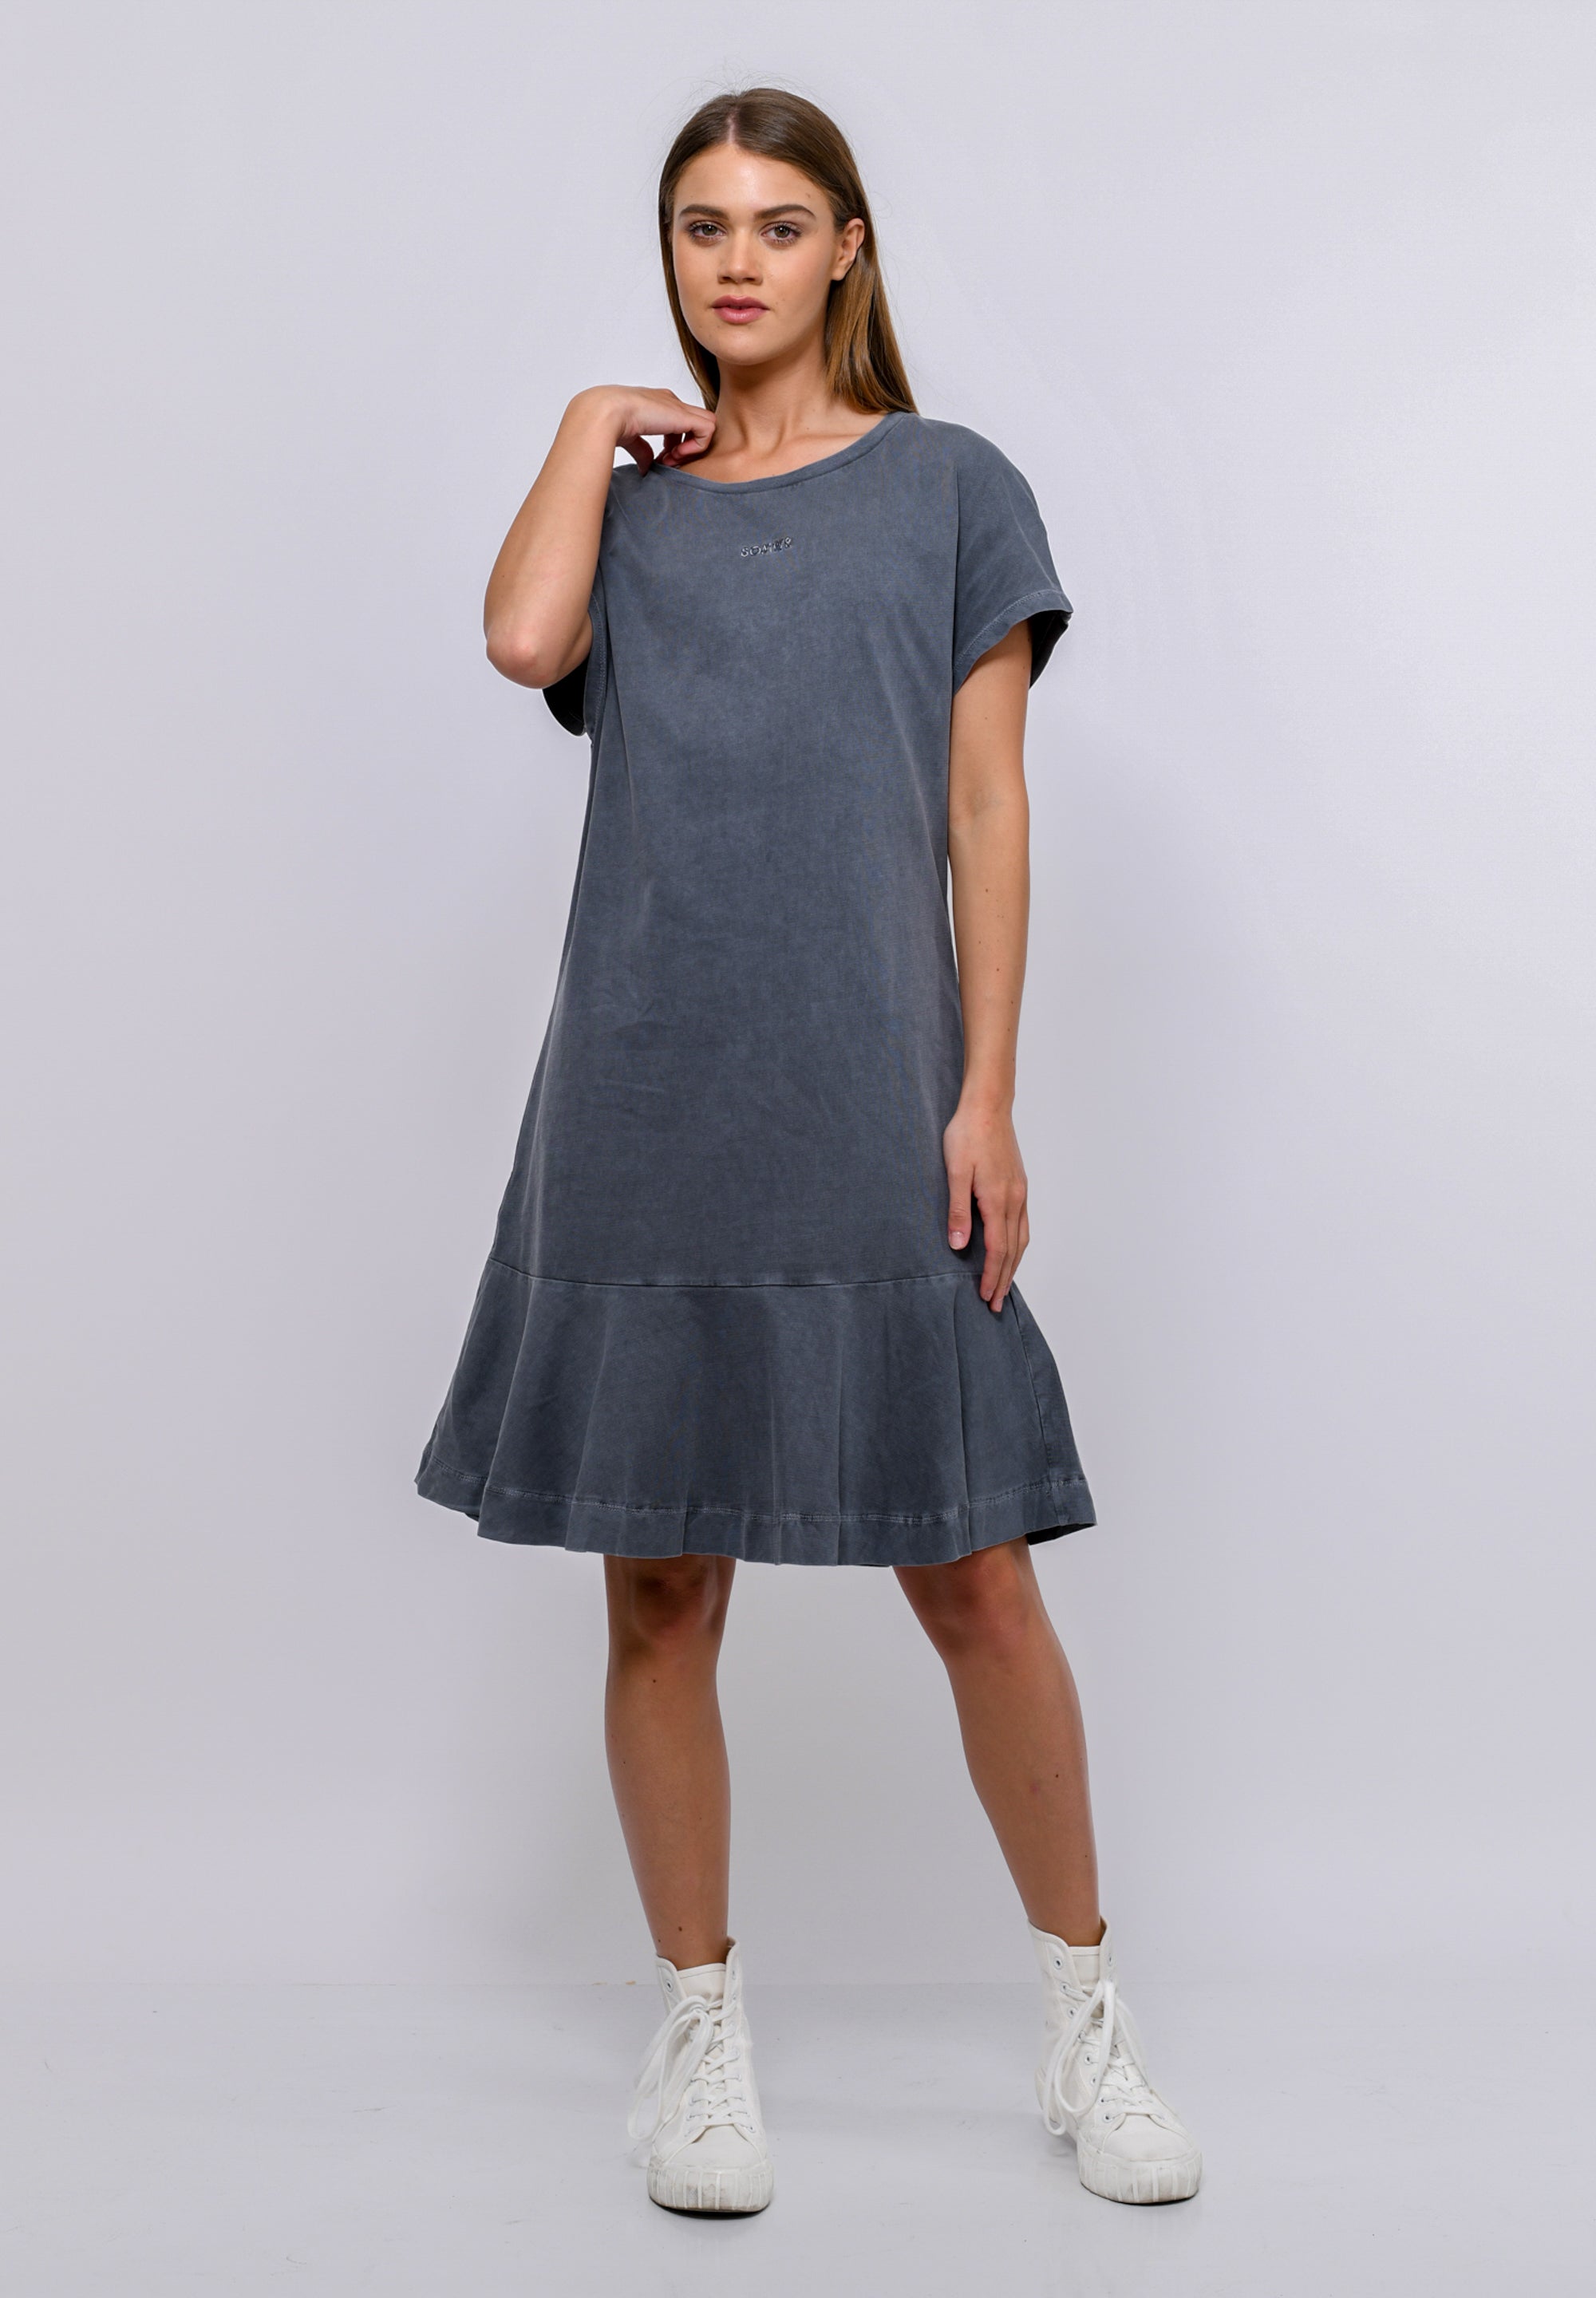 SOMWR BLAIR Dress GRY013